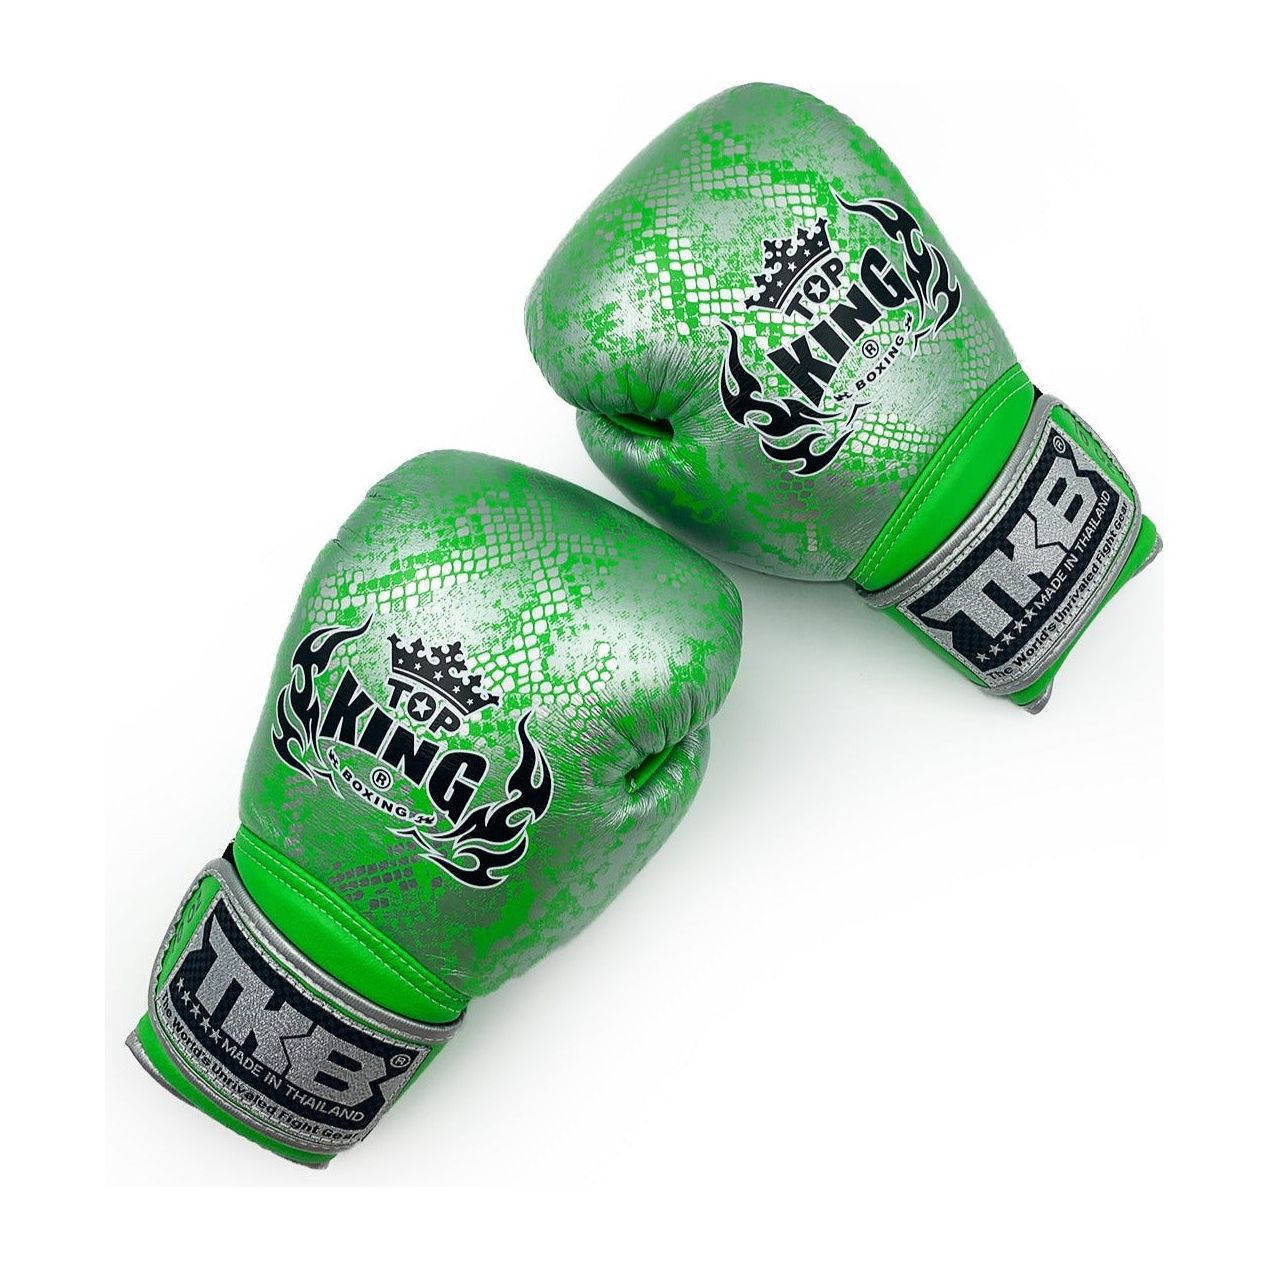 Top King Boxing Gloves TKBGSS-02 Snake “Air" Green Silver